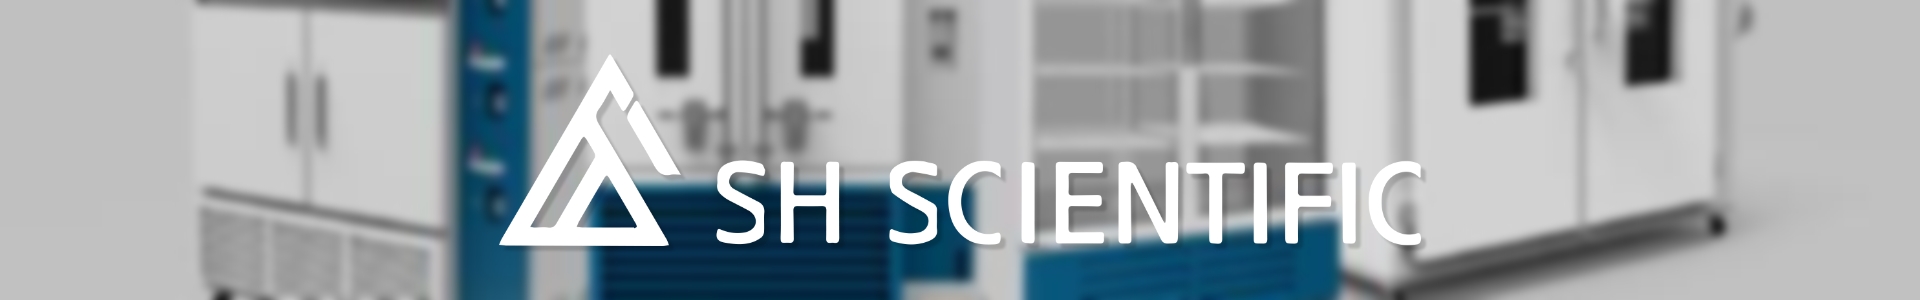 sh scientific brand - SH SCIENTIFIC